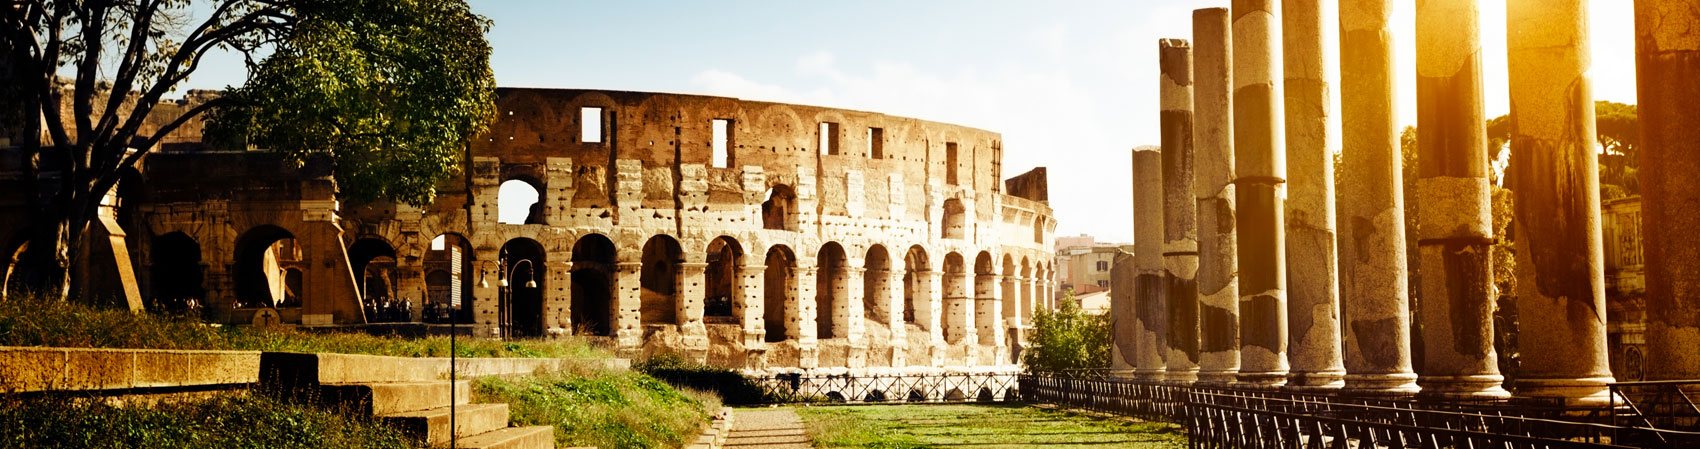 Coliseum and Roman Forum’s details in Rome